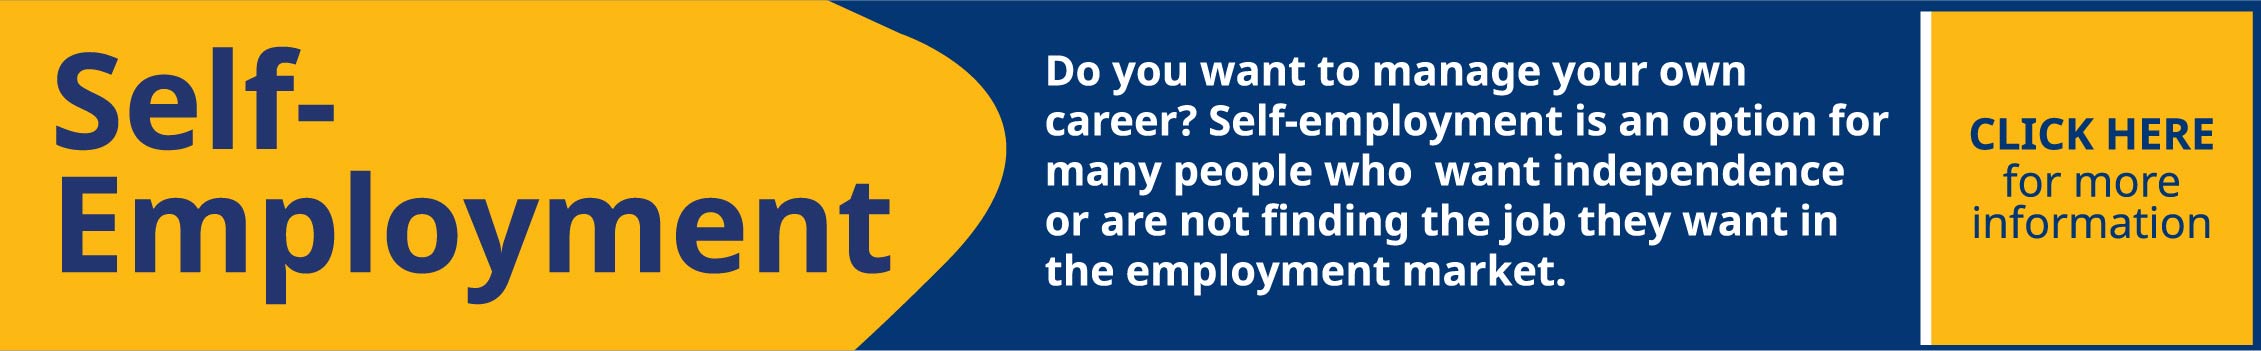 selfemployment-banner